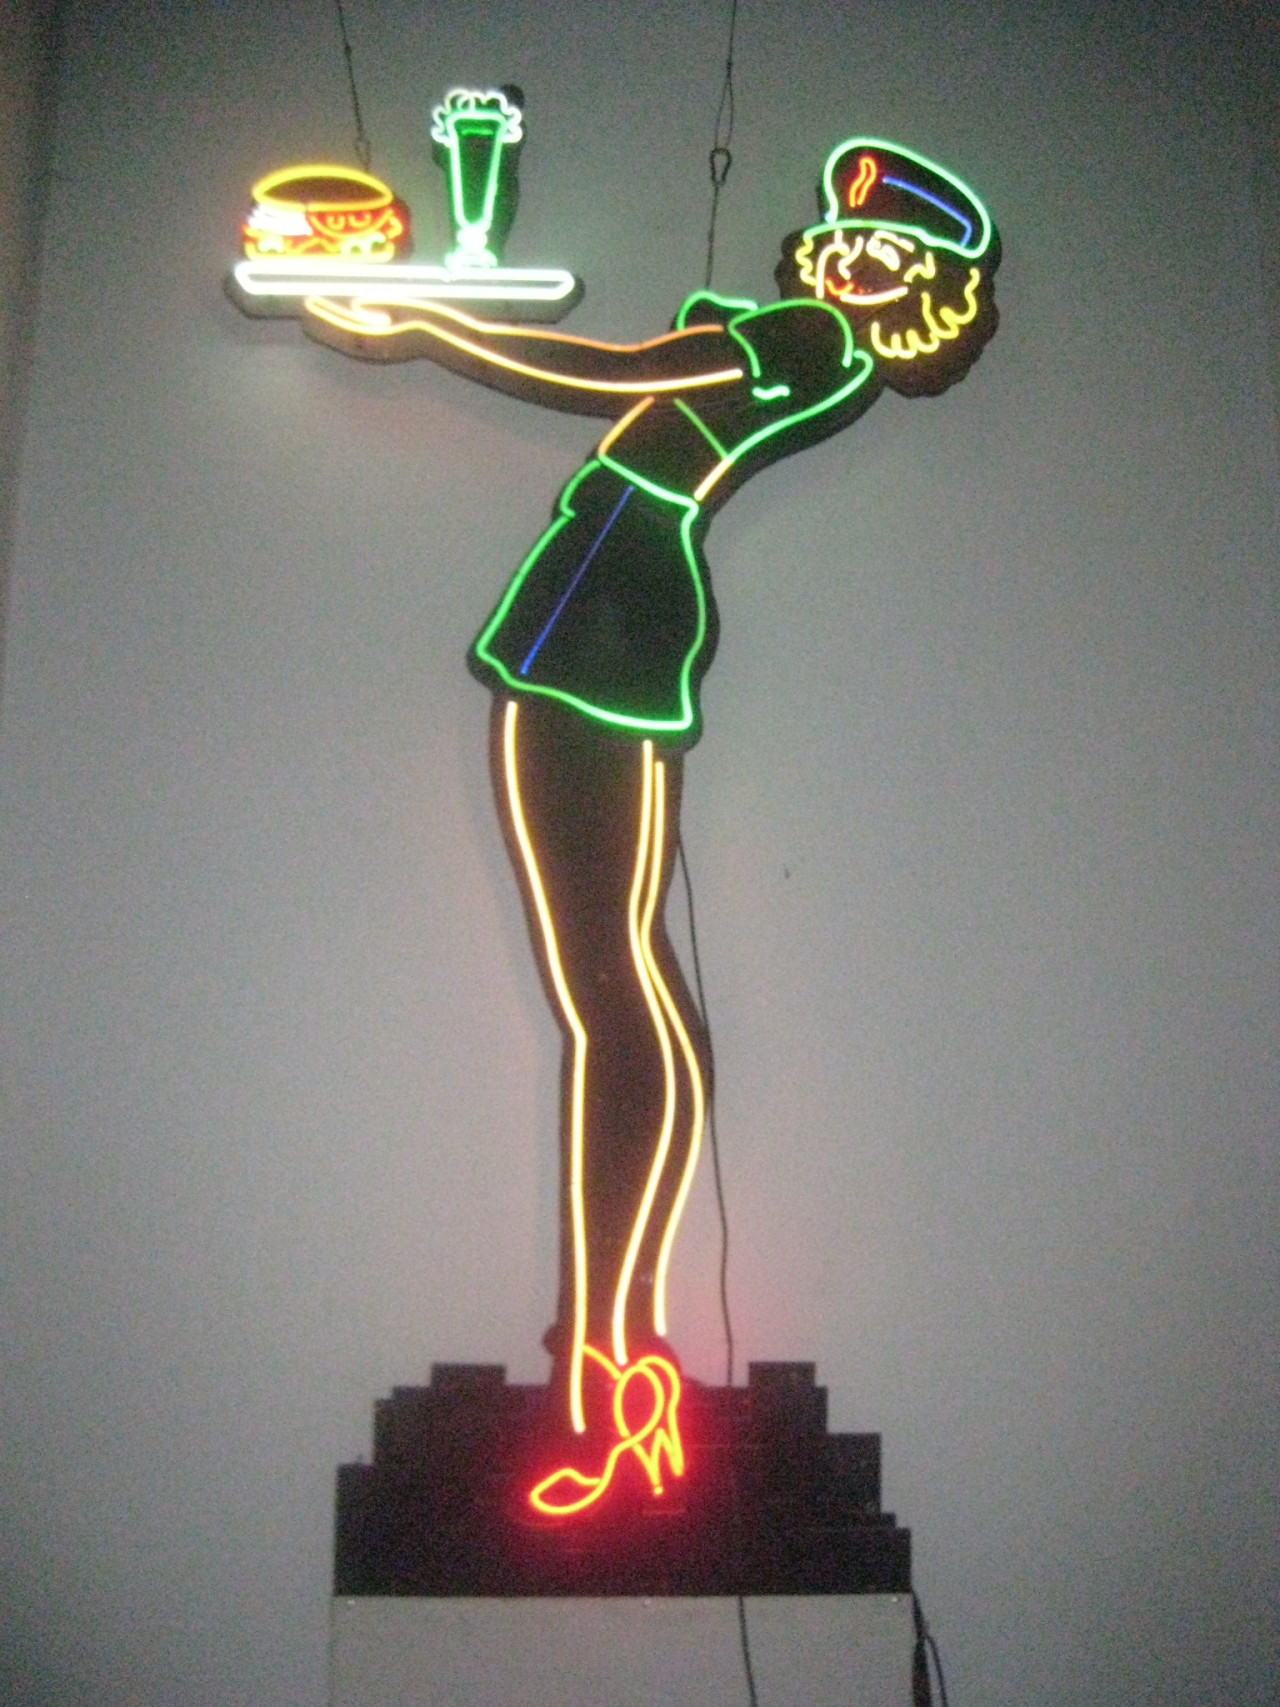 neon sign 7up 1975 signs california bakersfield arcade pinball game cash light webuypinball